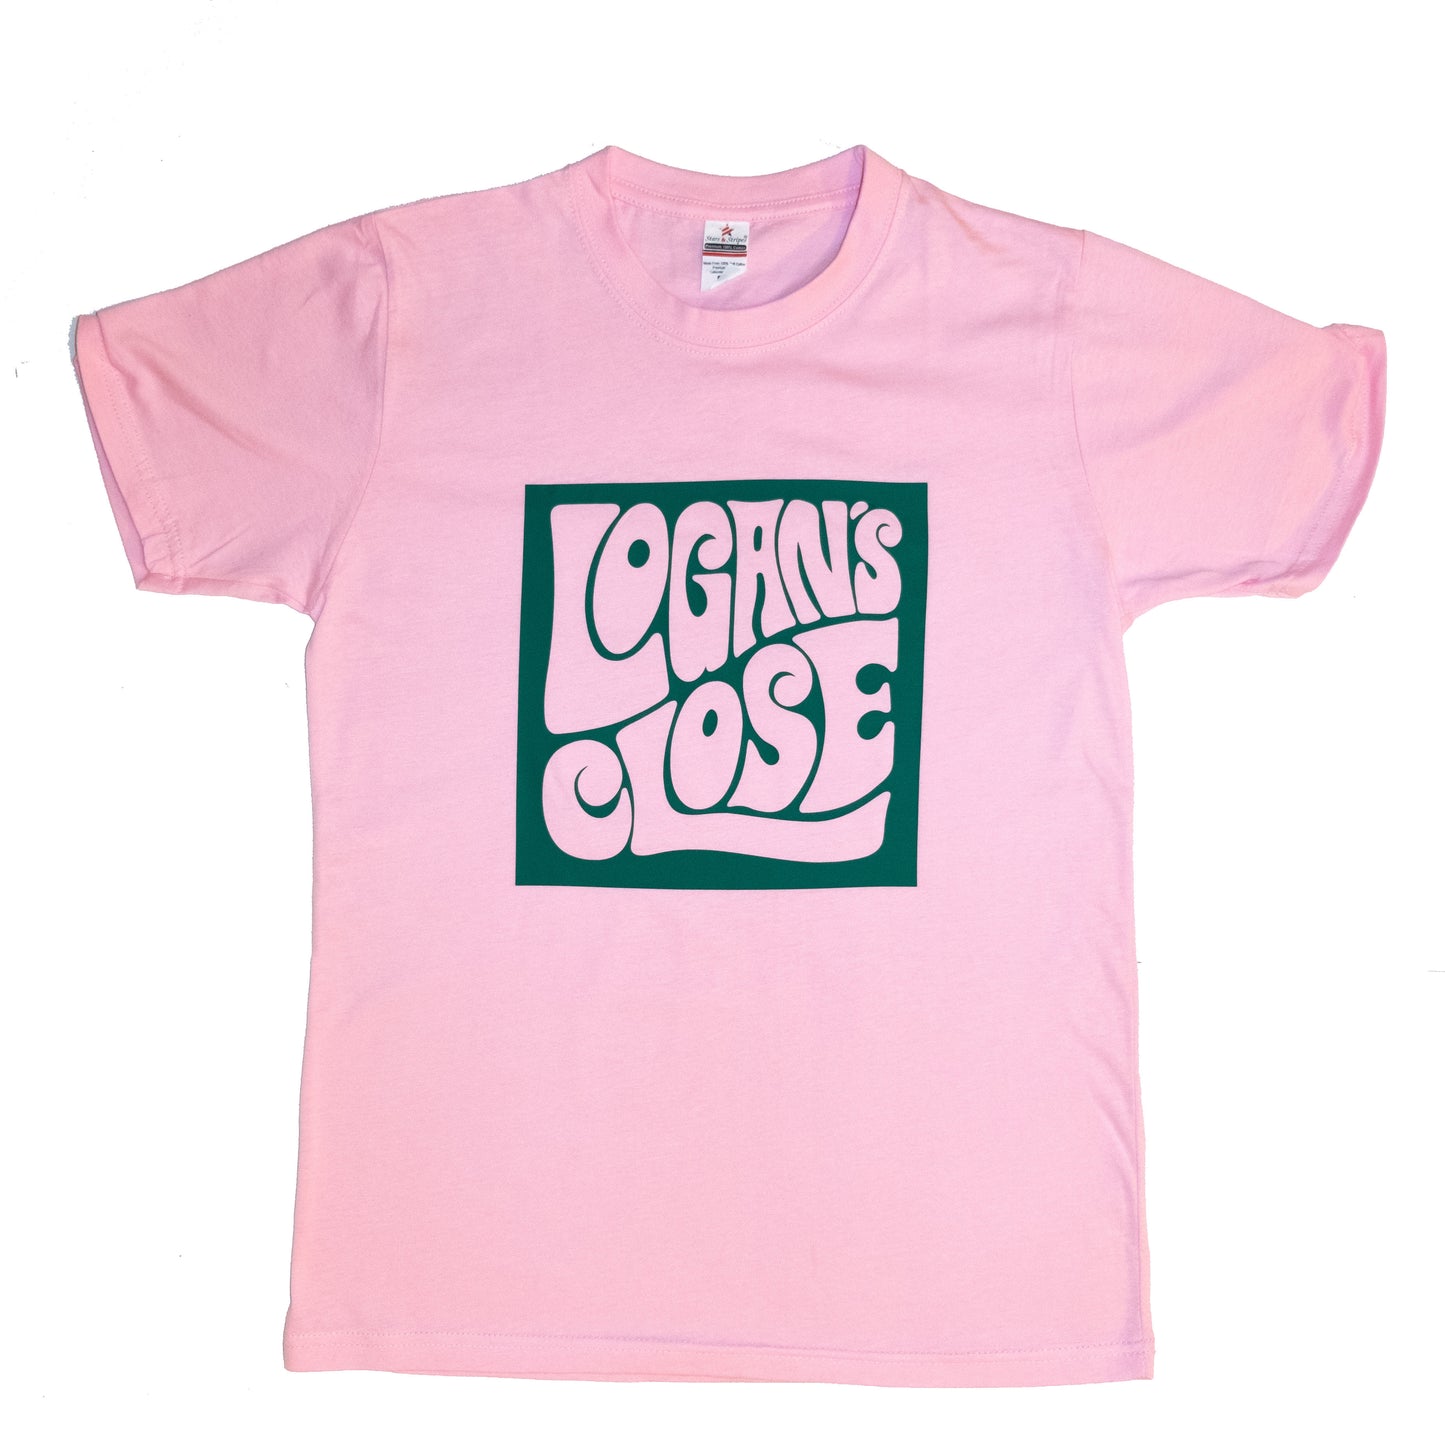 Logan's Close Logo T-Shirt – Rosa/Grün